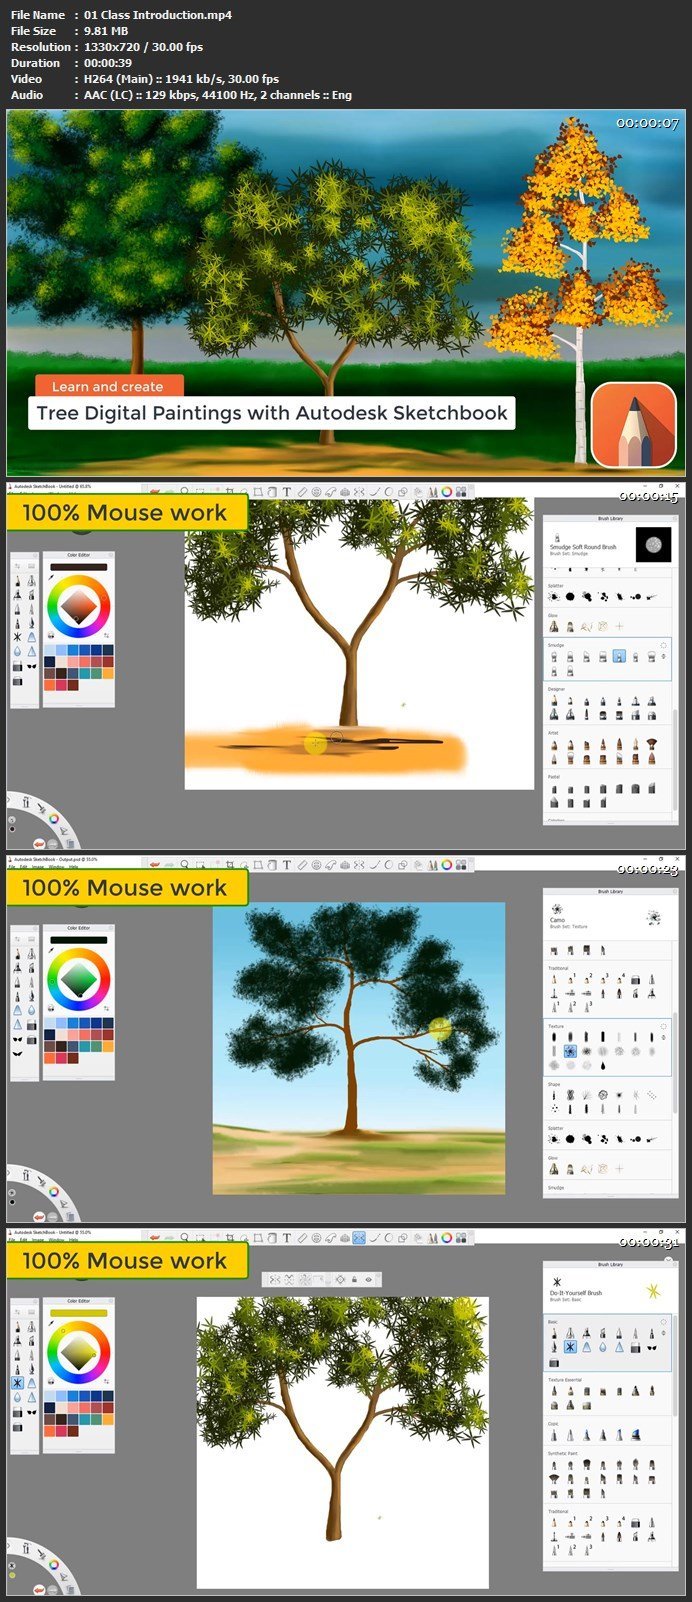 Learn and Create Tree Digital Paintings with Autodesk Sketchbook